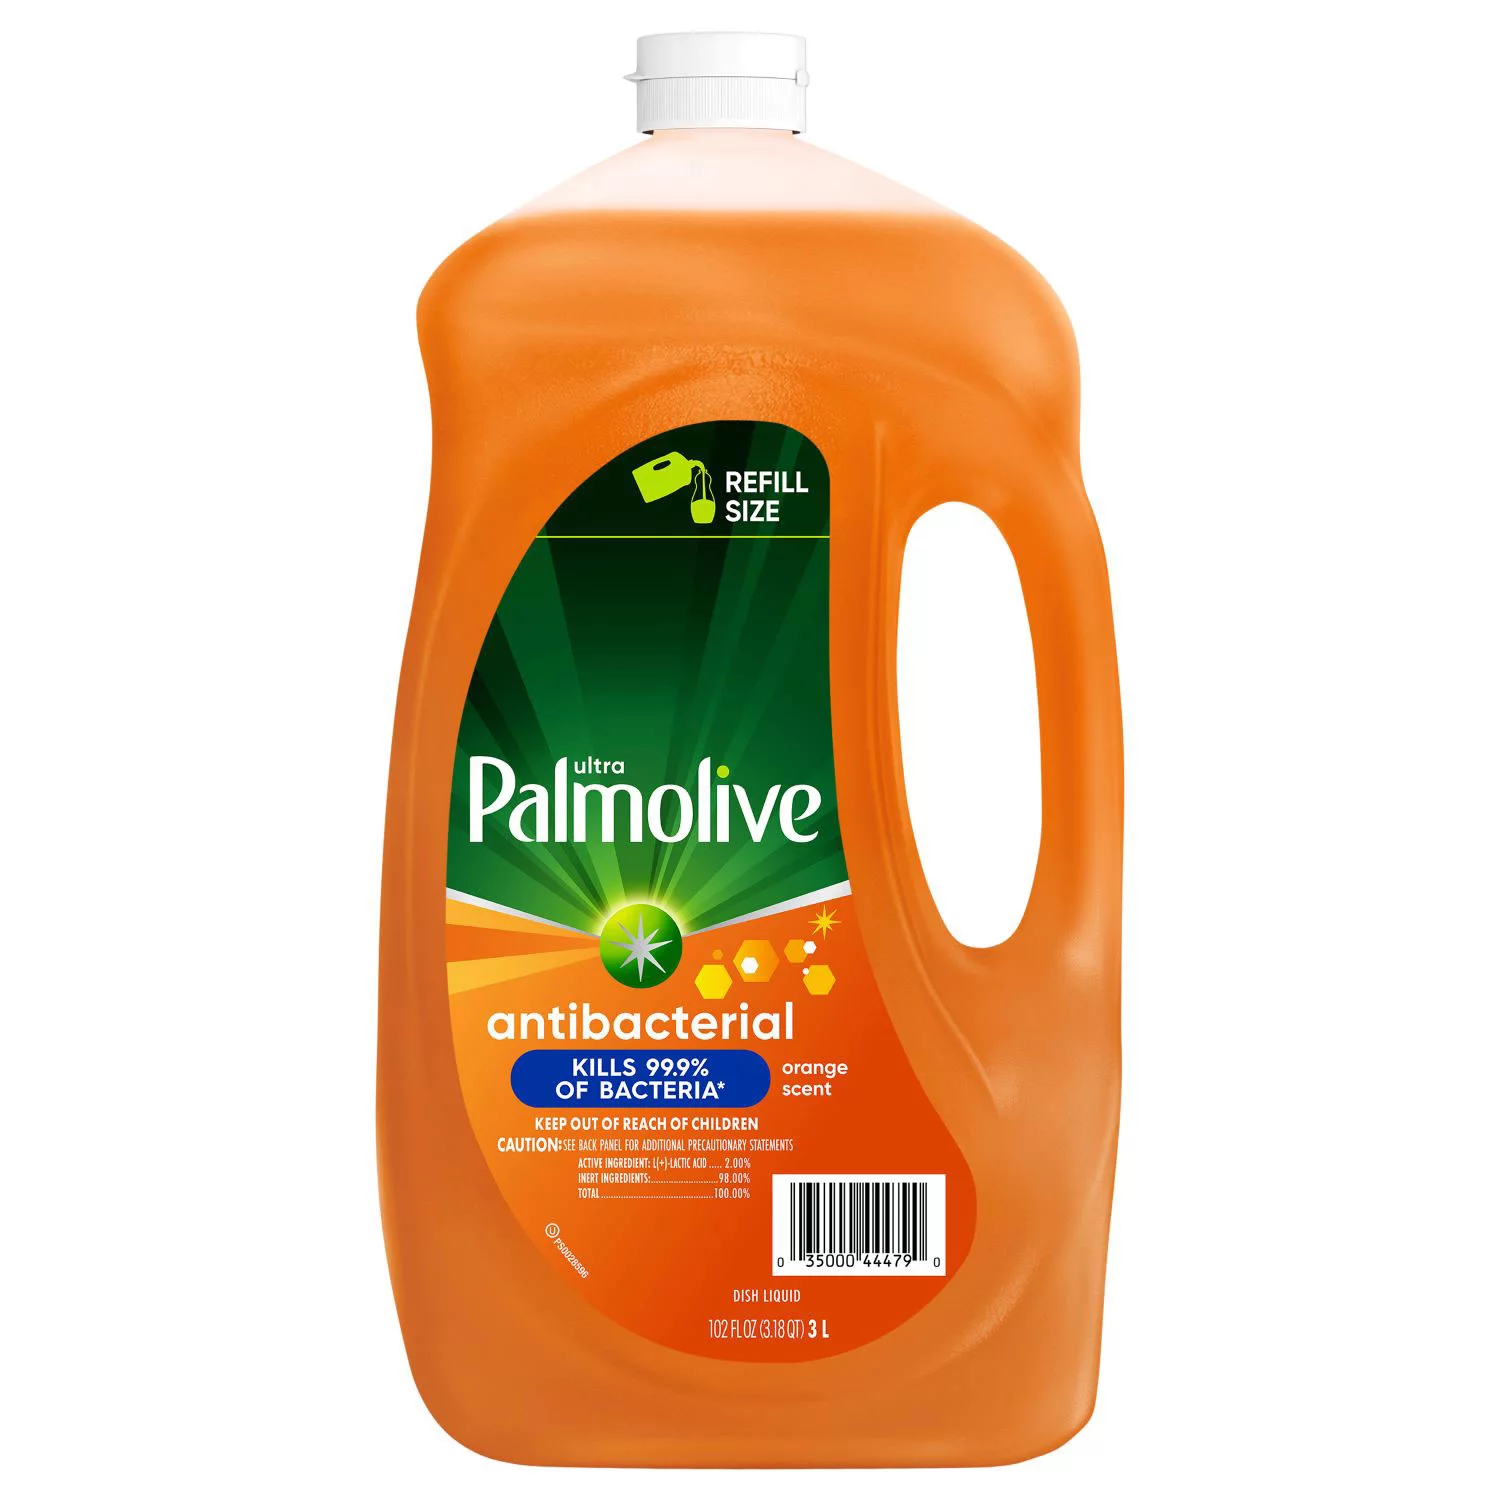 Palmolive Antibacterial Dishwashing Liquid (102 fl.oz.)